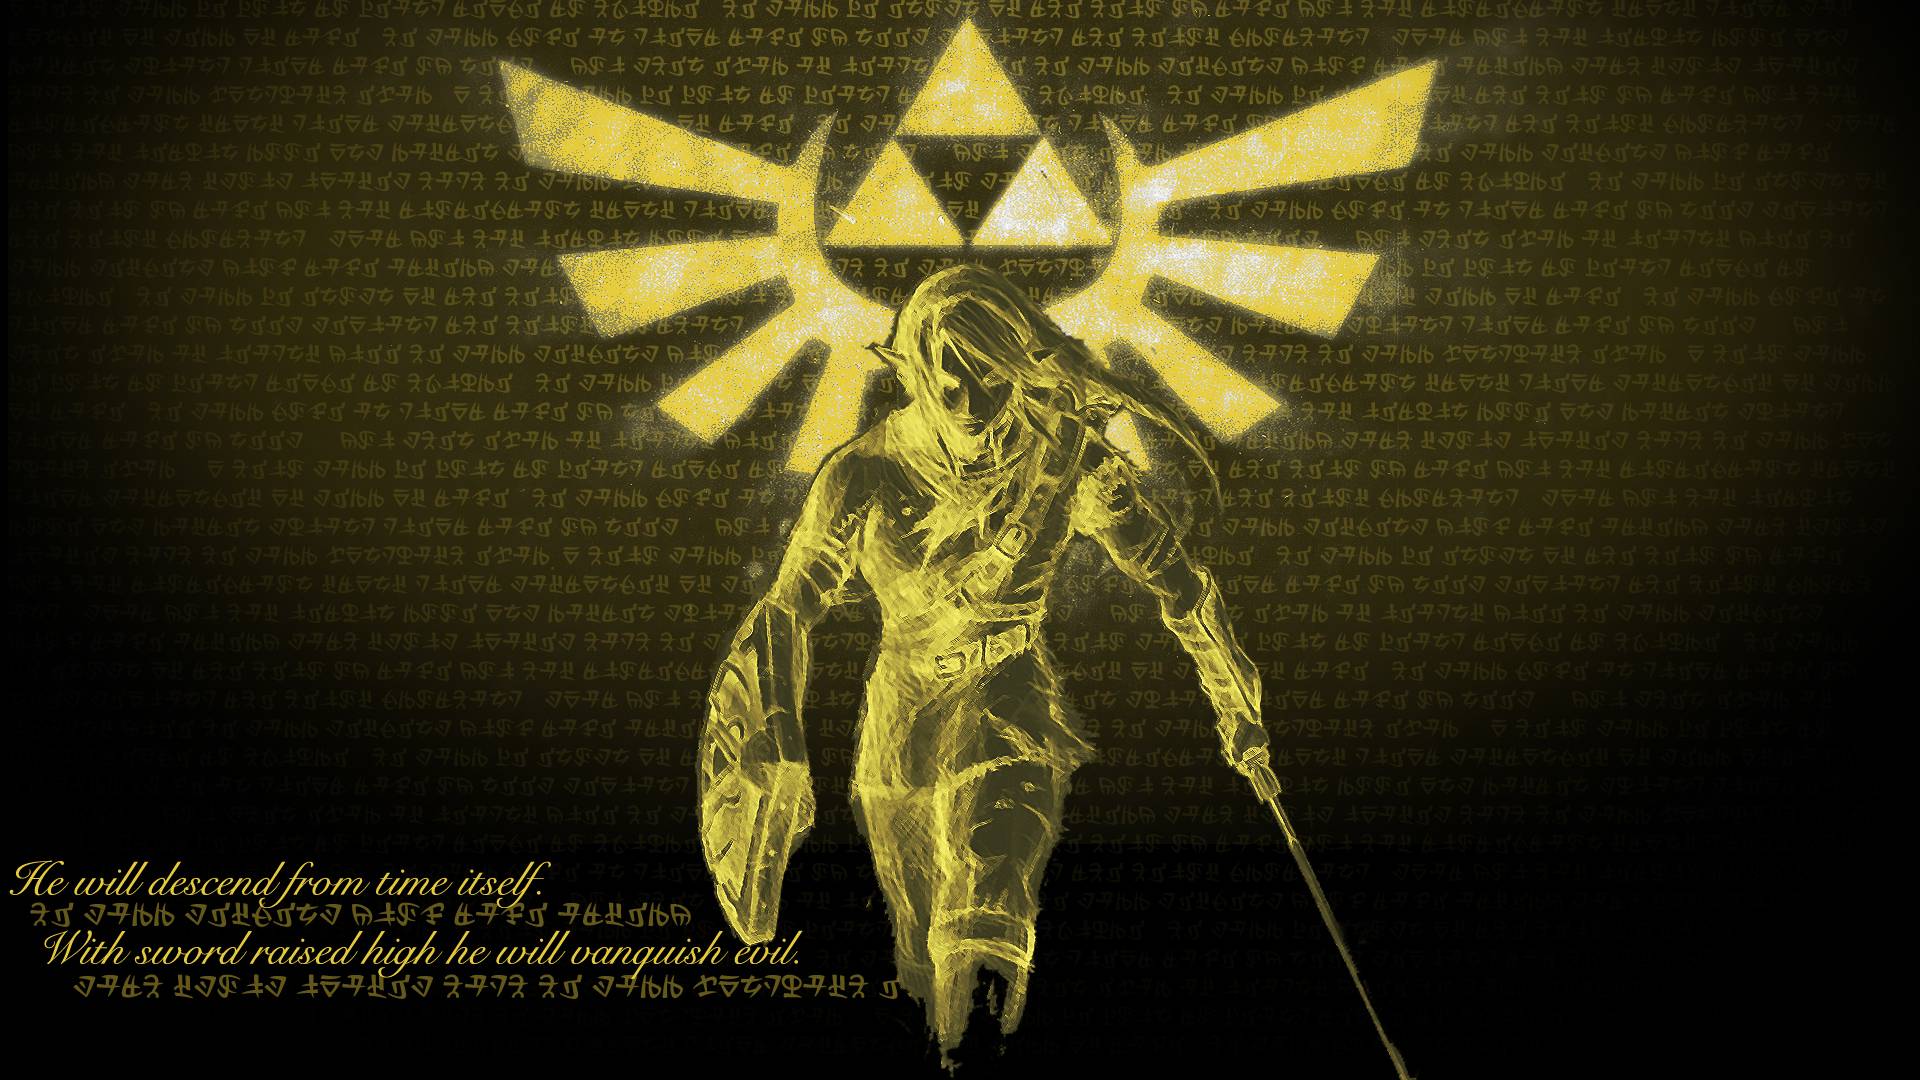 Link, The Legend of Zelda, Nintendo, Master Sword, Hylian Shield